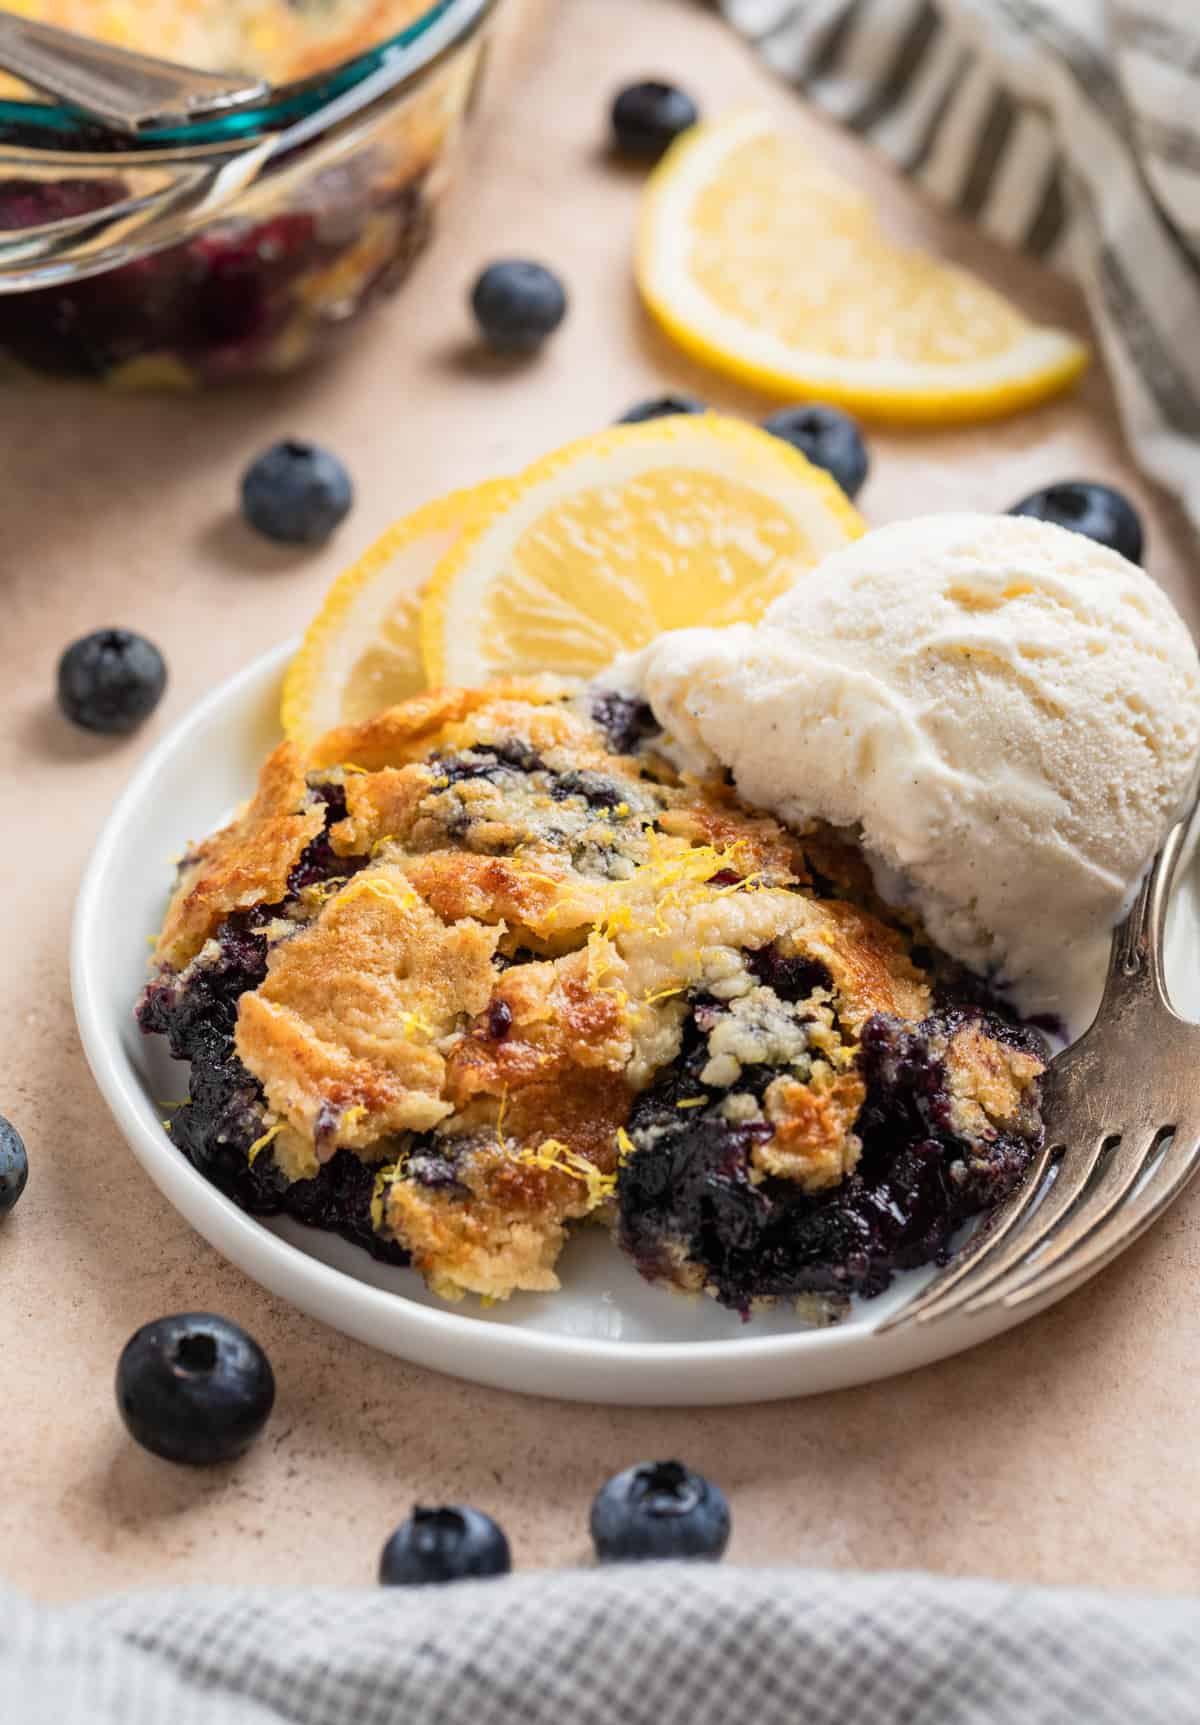 Blueberry lemon dump cake on plate with vanilla ice cream scoop and lemon slices on plate.